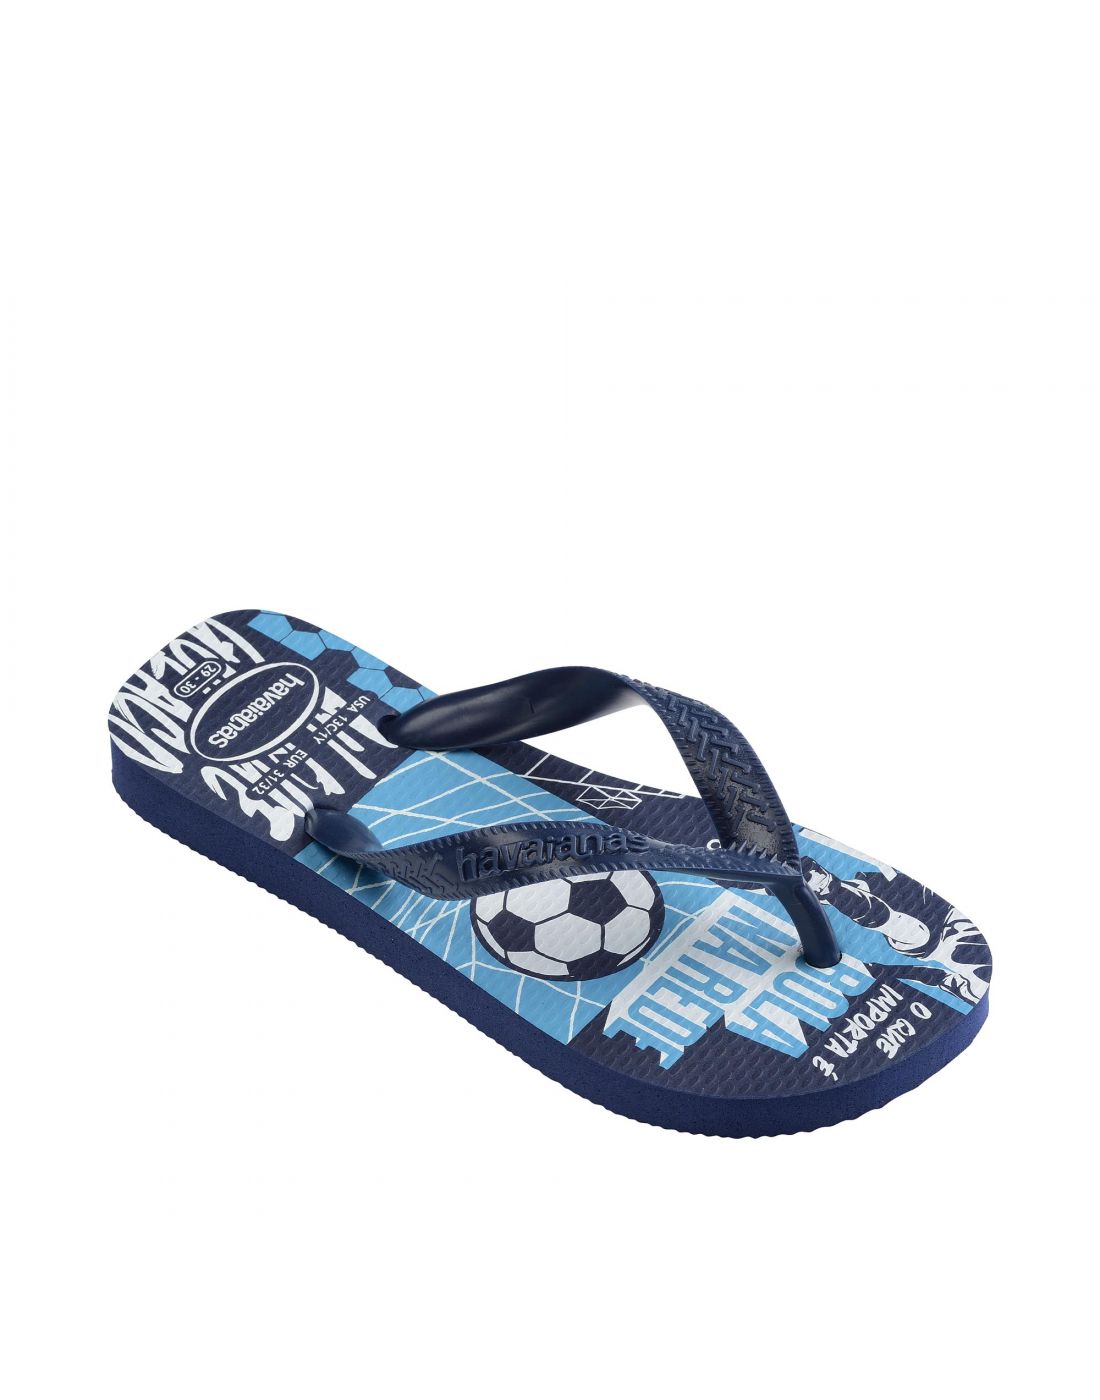 Havaianas Flip-Flops Athletic Navy Blue